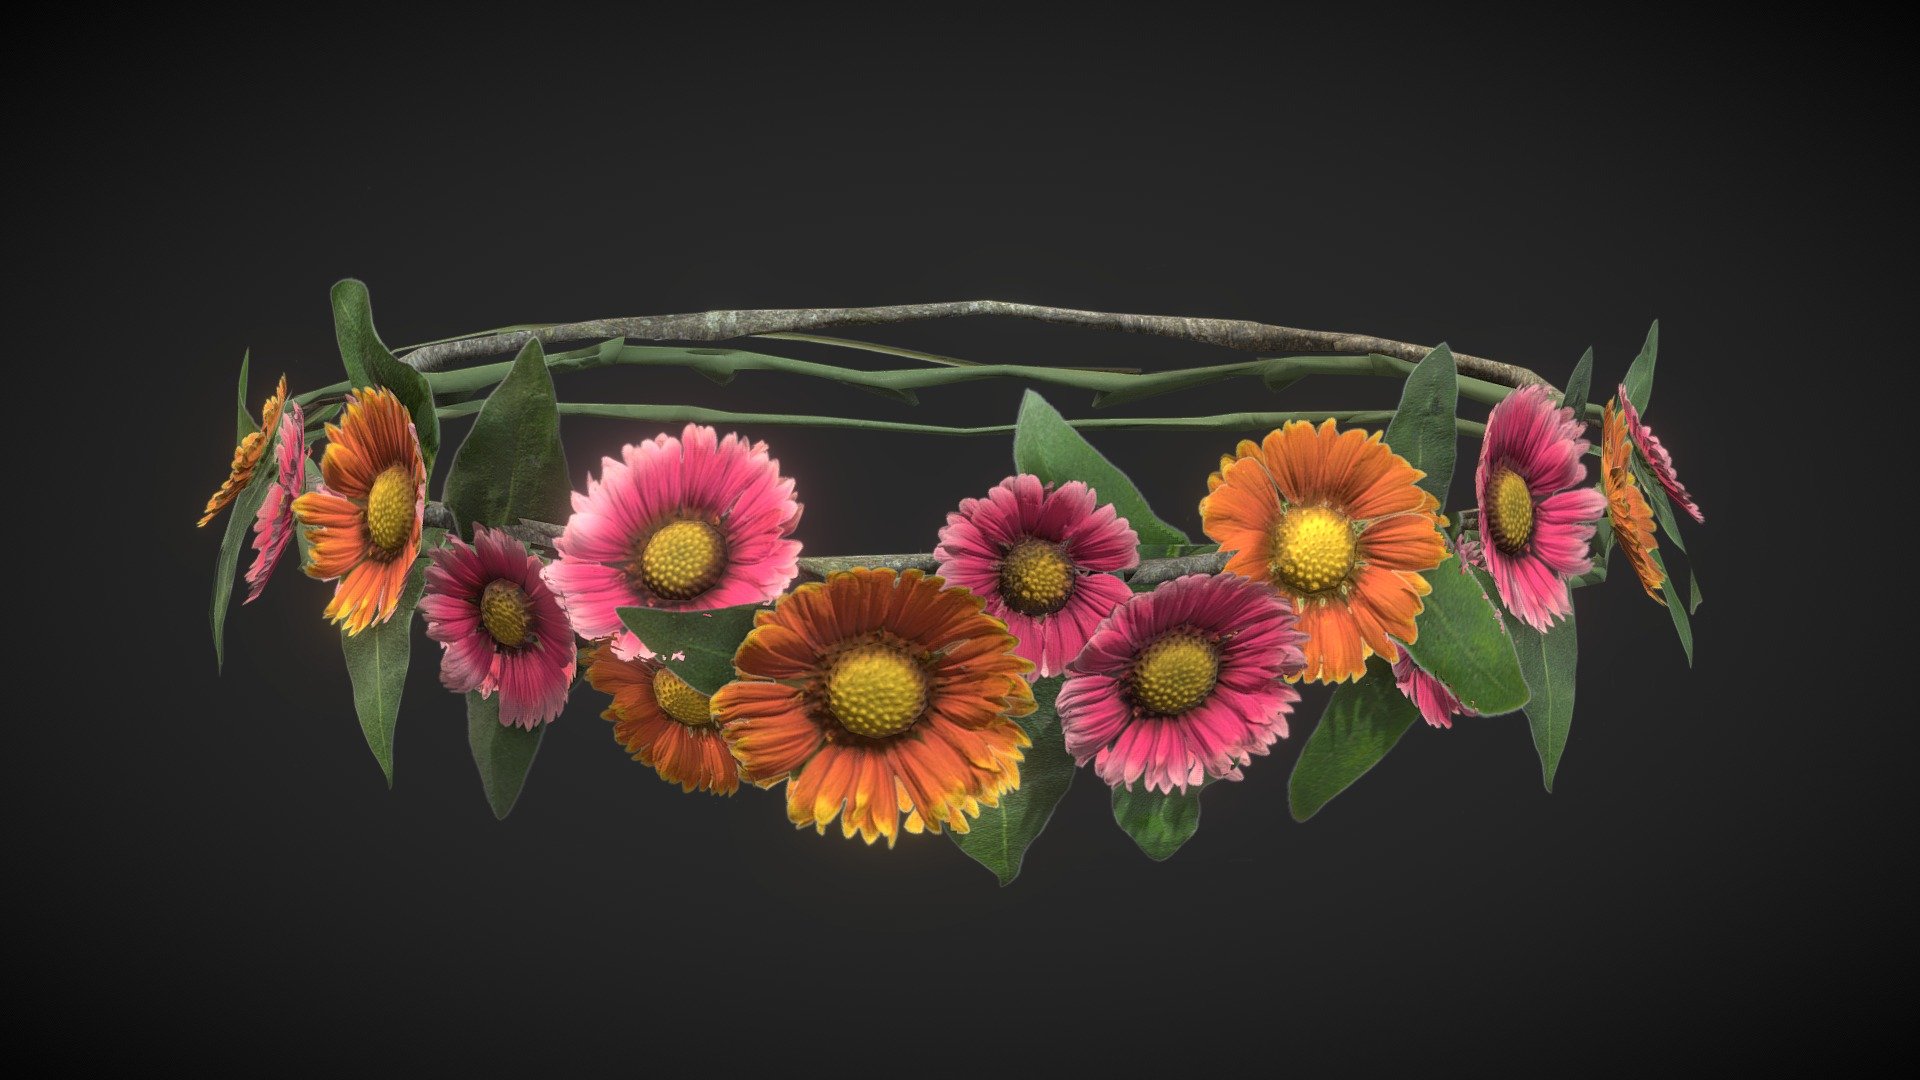 flowers wreath / Gerbers Flower Crown - low poly

Triangles: 3.4k
Vertices: 2k

4096x4096 PNG texture - Gerbers Flower Crown - low poly - Buy Royalty Free 3D model by Karolina Renkiewicz (@KarolinaRenkiewicz) 3d model